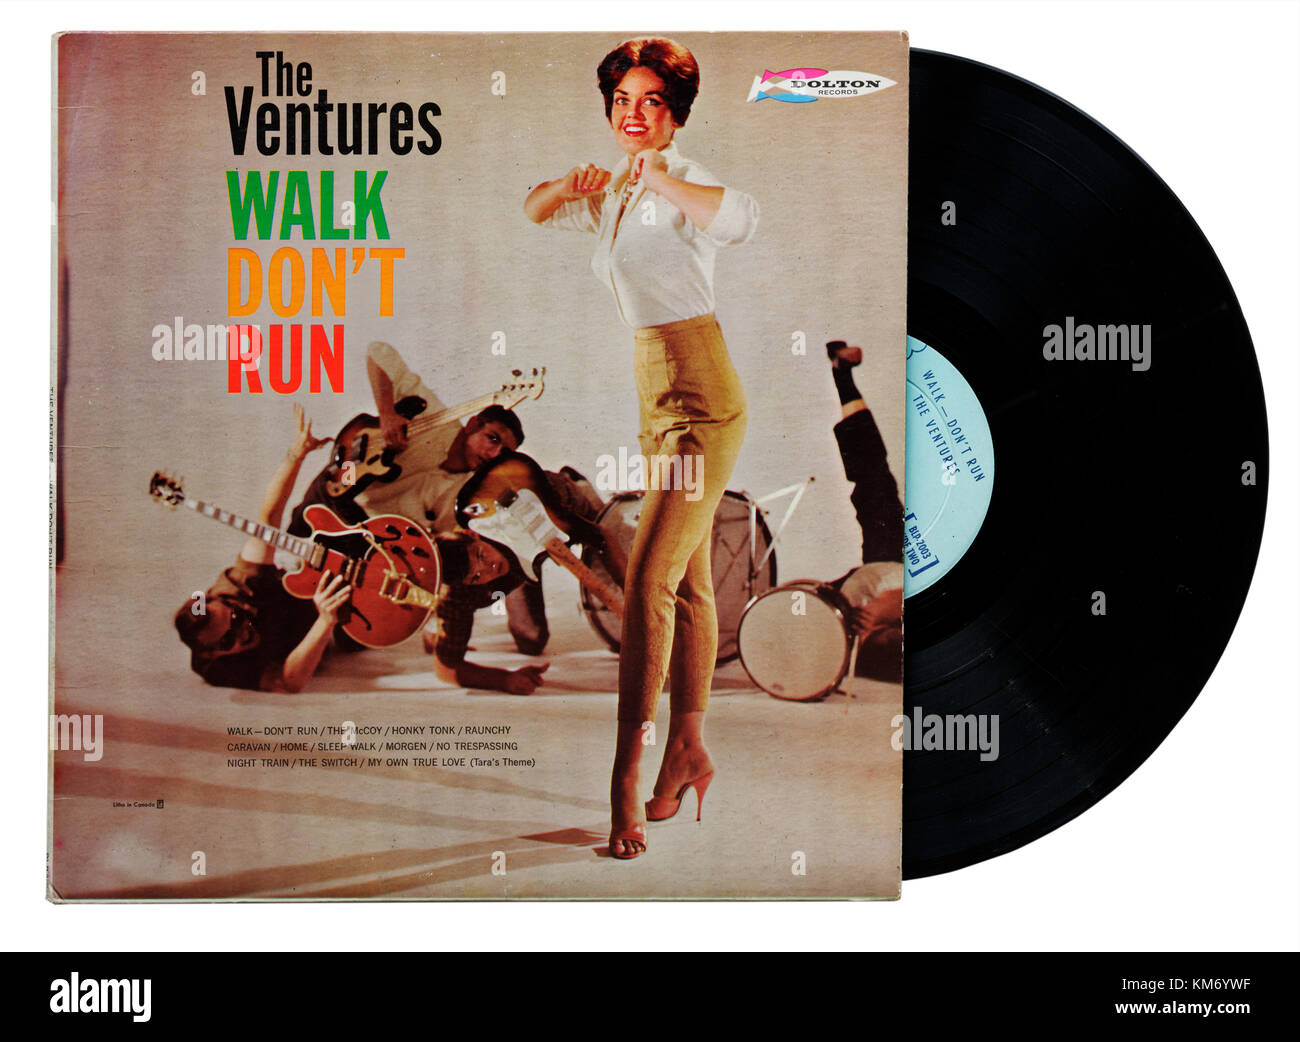 The Ventures Walk Don't Run album Stock Photo - Alamy